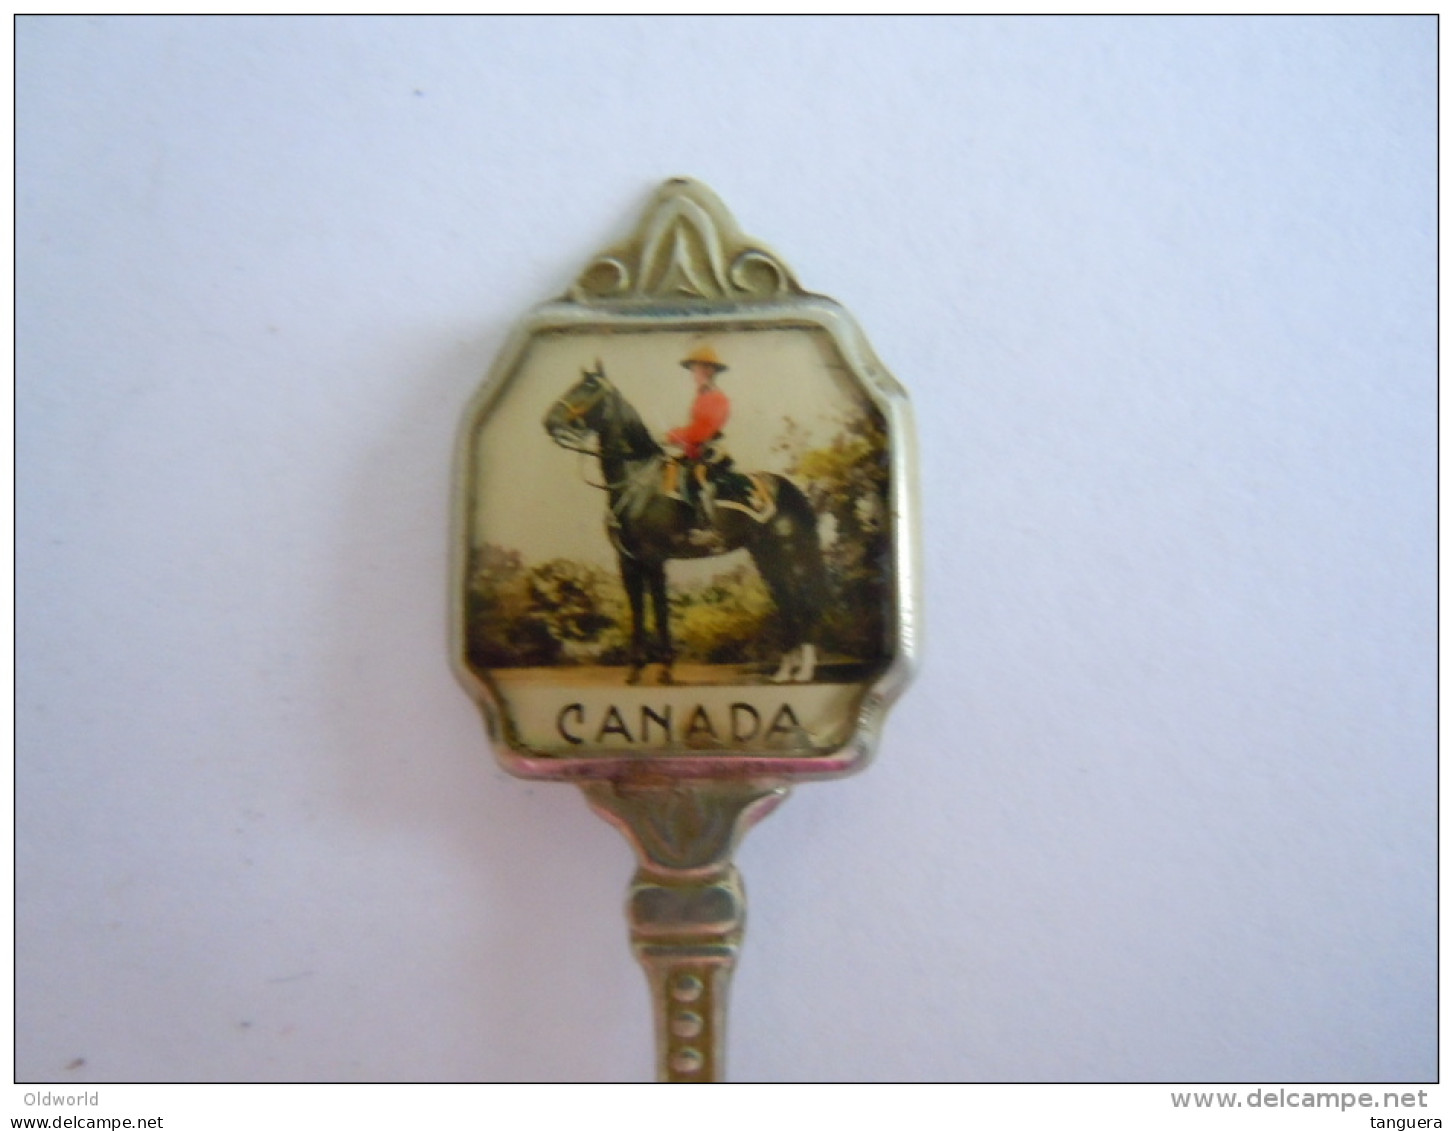 CANADA Police Bereden Politie Mounties RCMP Vintage Souvenir Lepel Petite Cuillère Little Spoon (ref 12) - Cucchiai